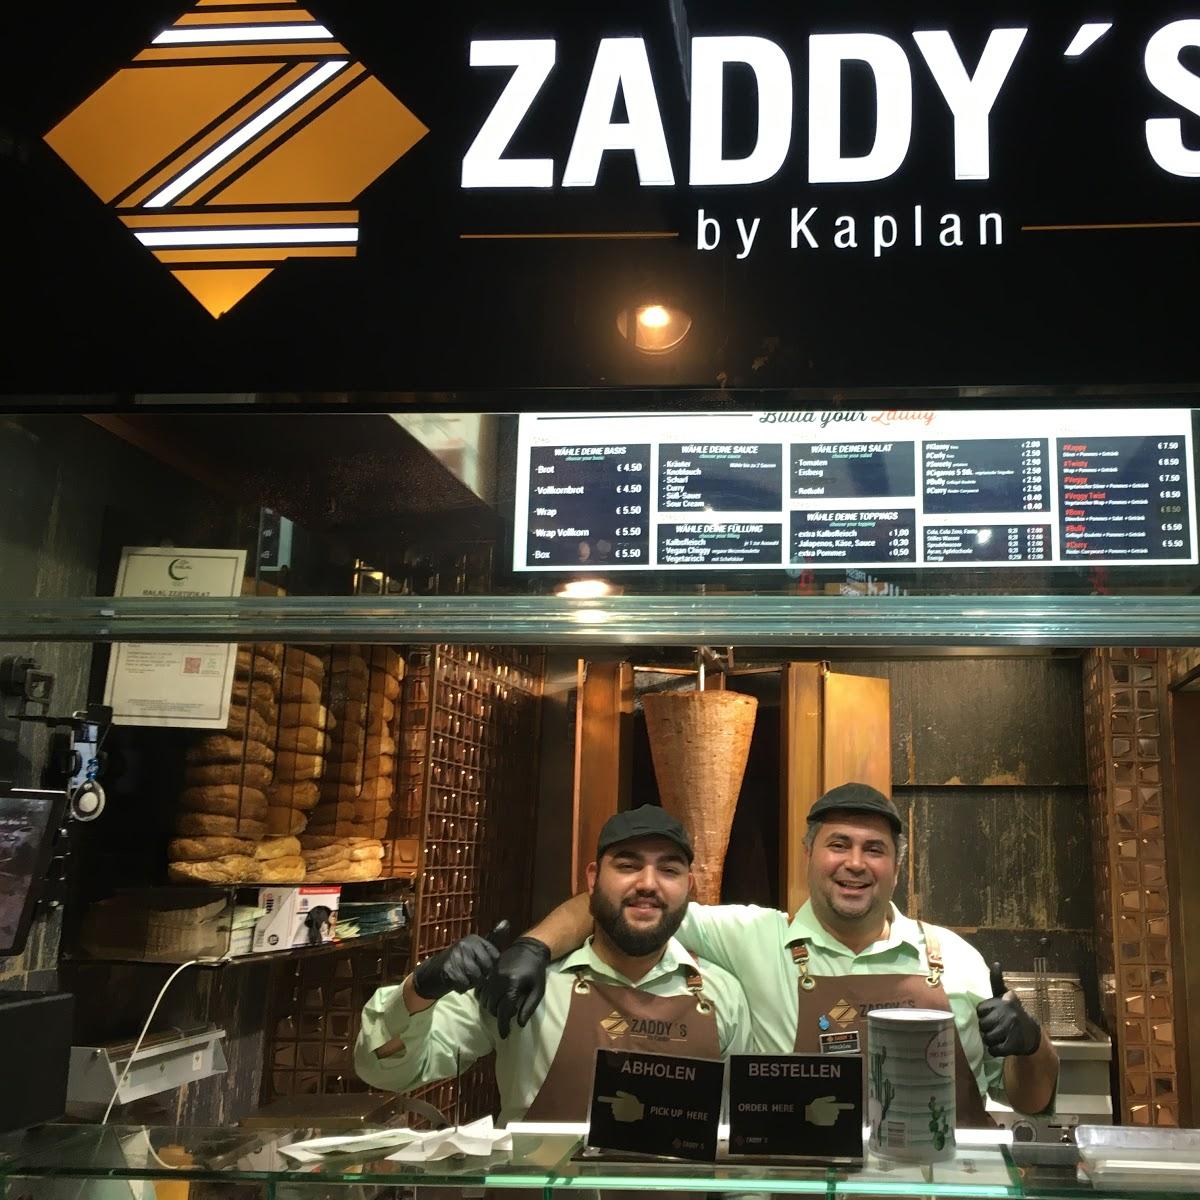 Restaurant "Zaddy